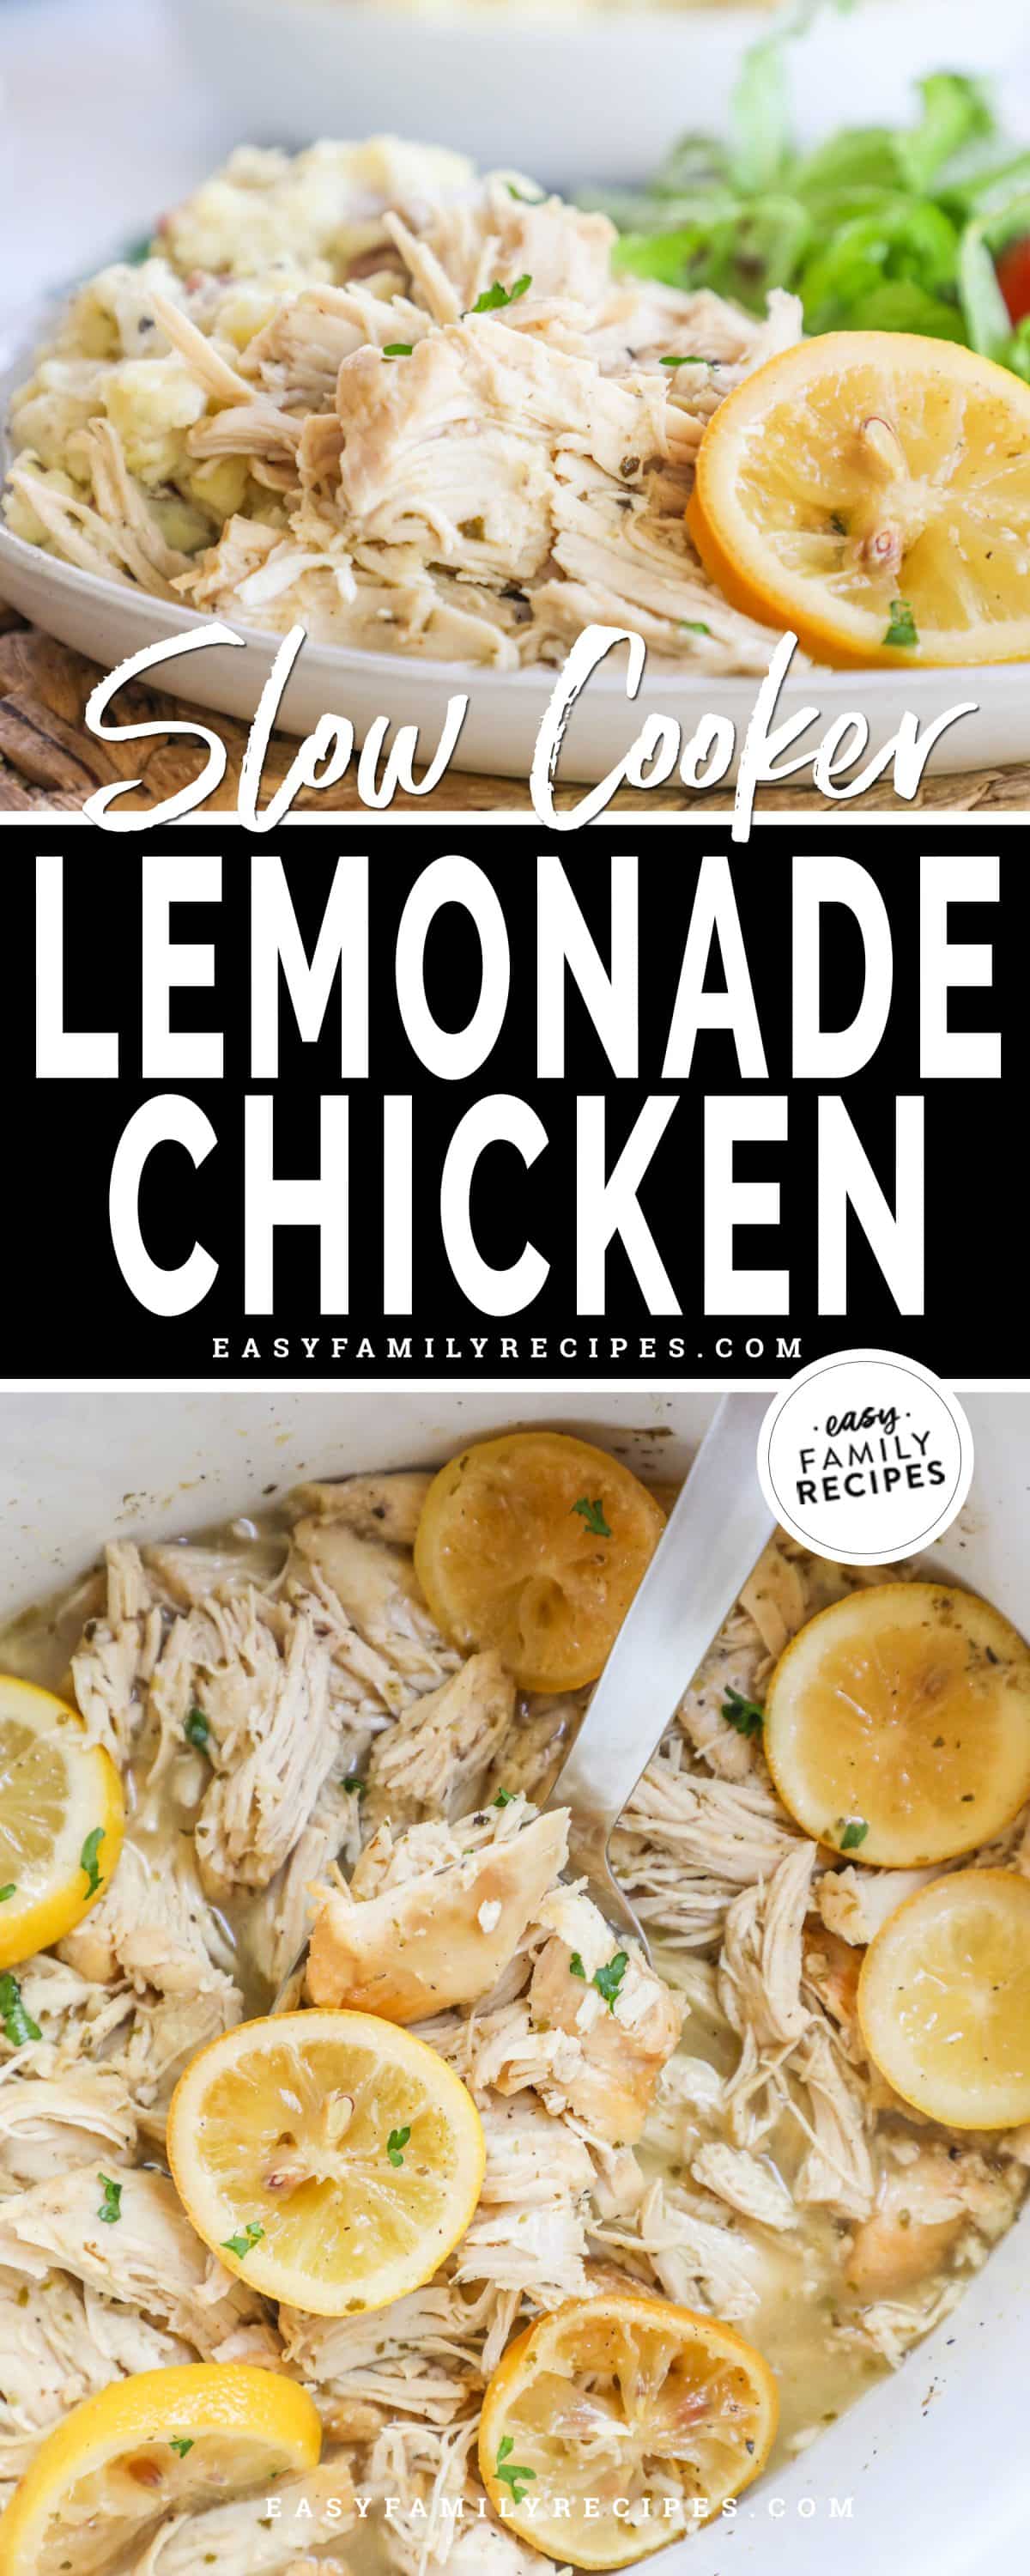 Top photo: crockpot lemonade chicken on plate with salad and slice of lemon, bottom photo: lemonade chicken in crockpot